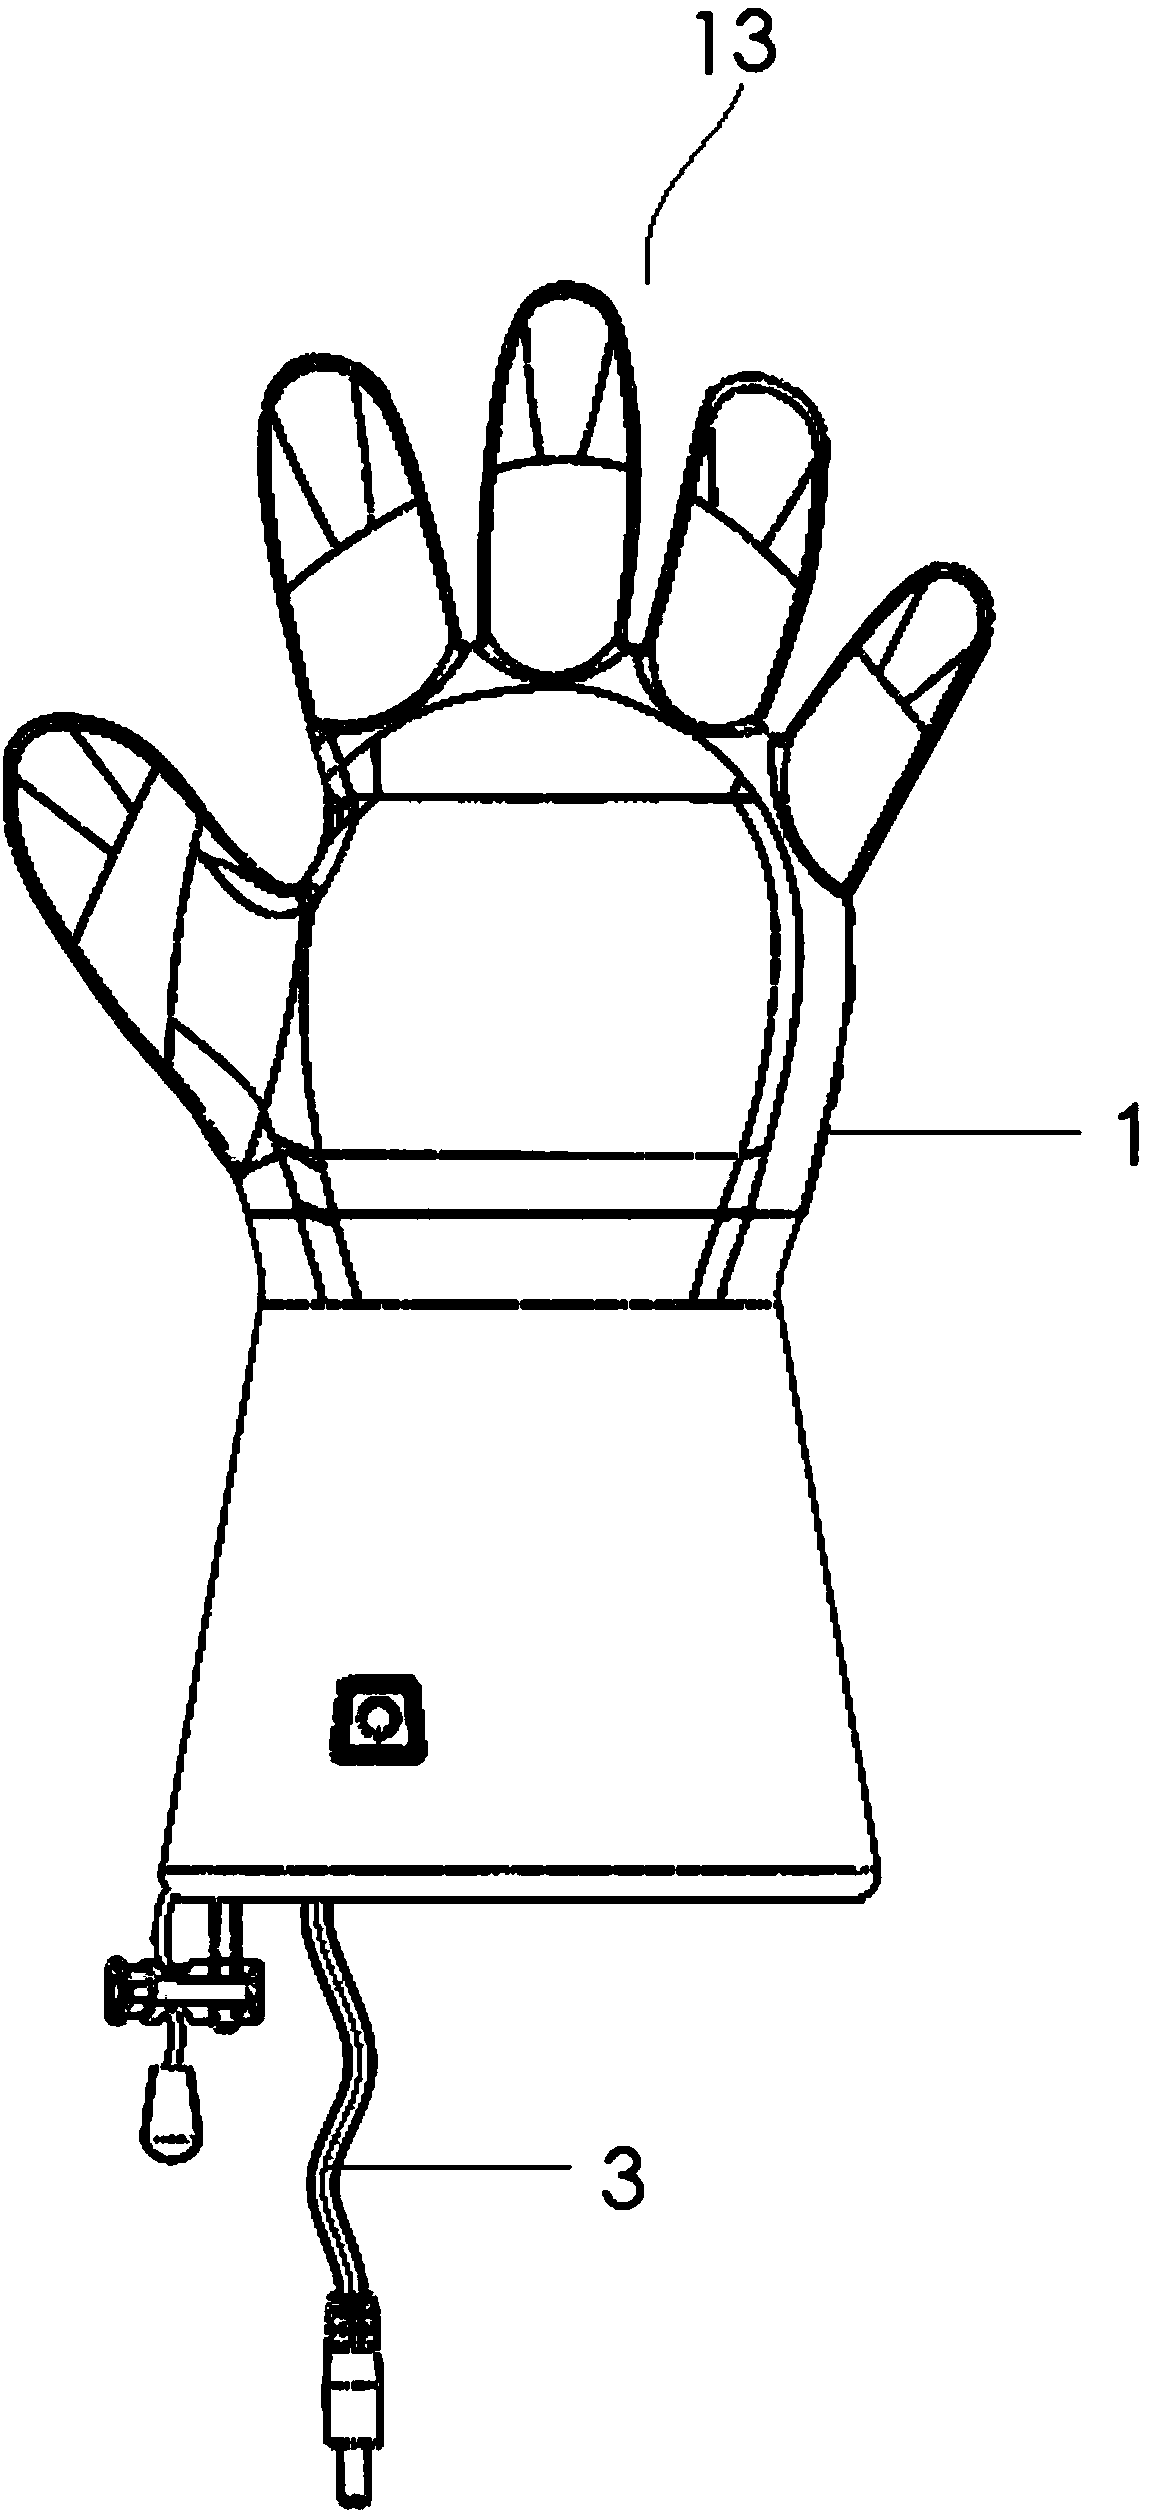 Heating glove